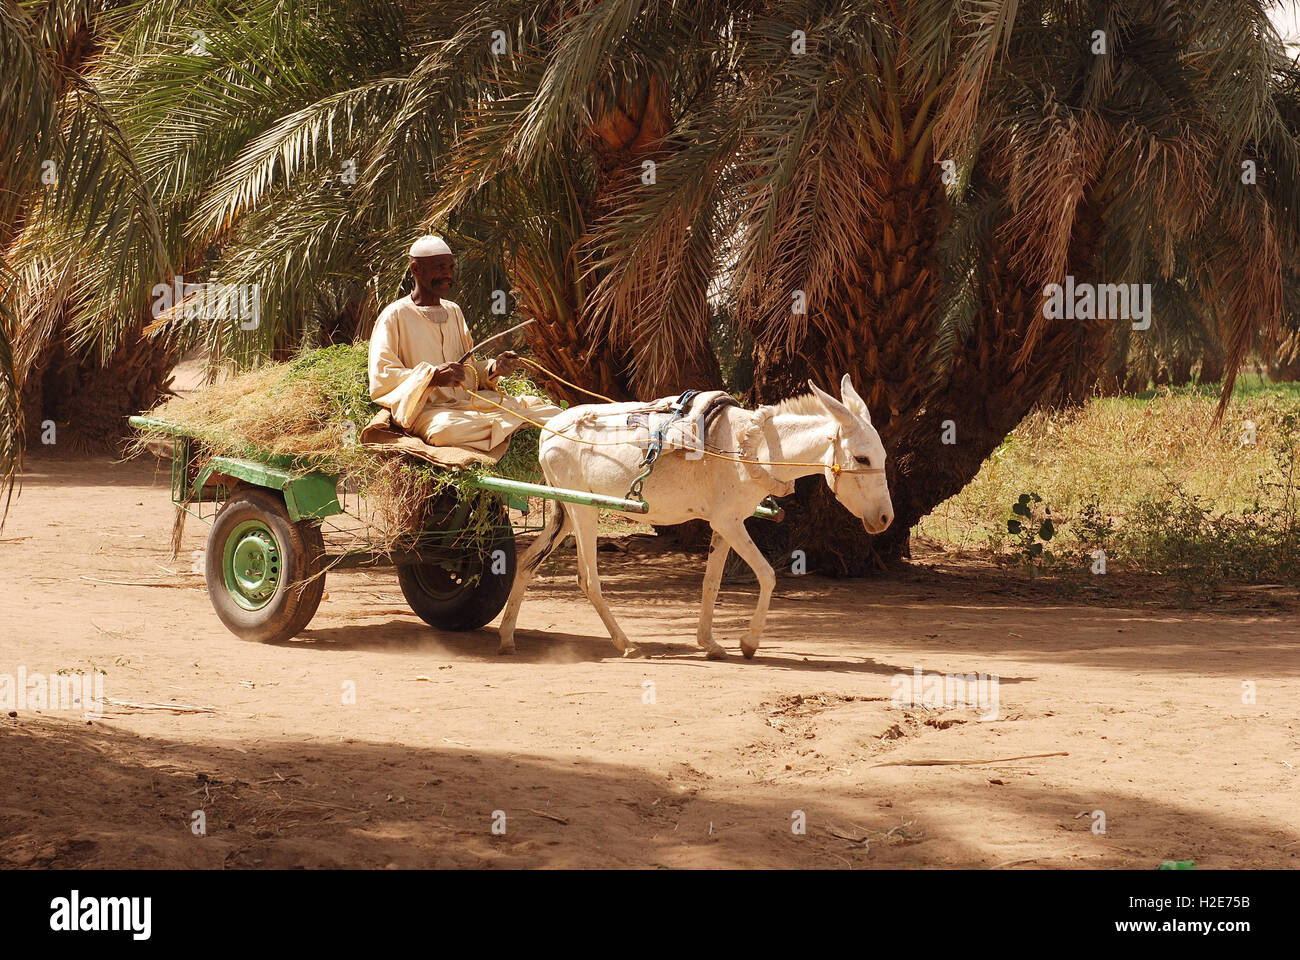 Local man riding donkey cart, Sudan Stock Photo